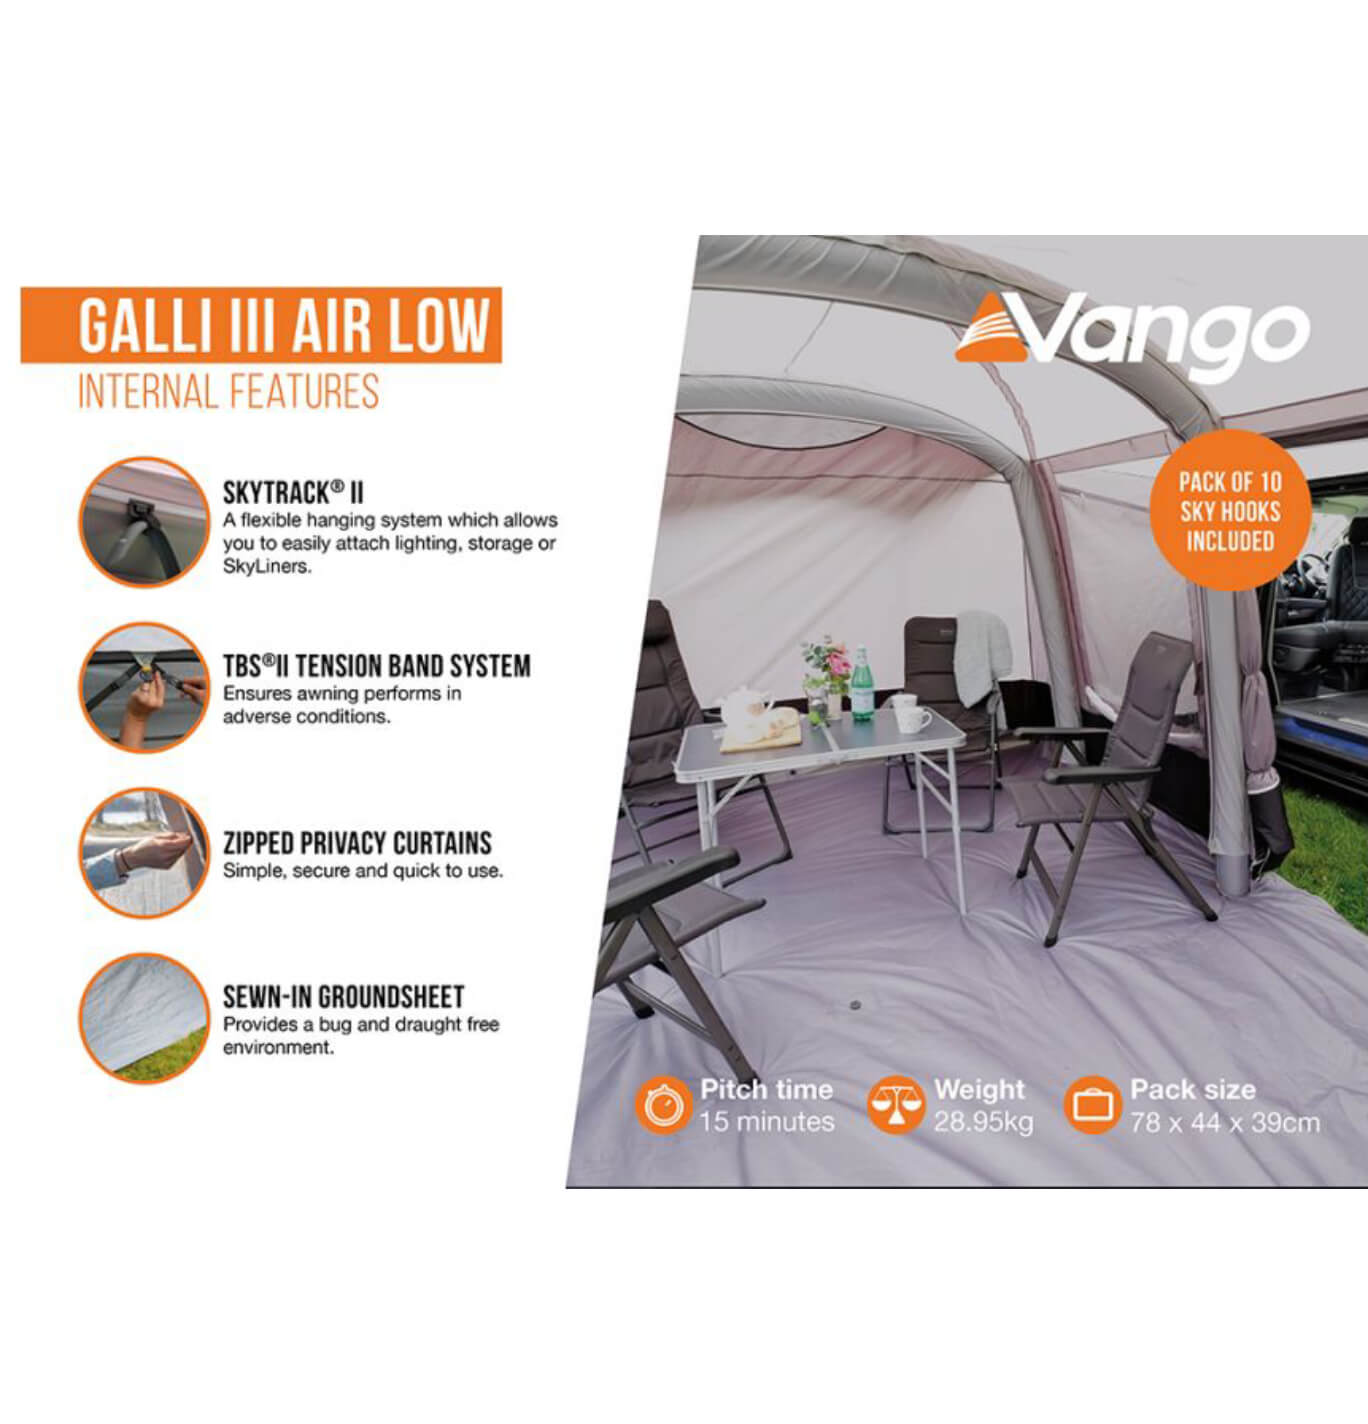 Vango Galli III Low AirWay Drive Away Awning